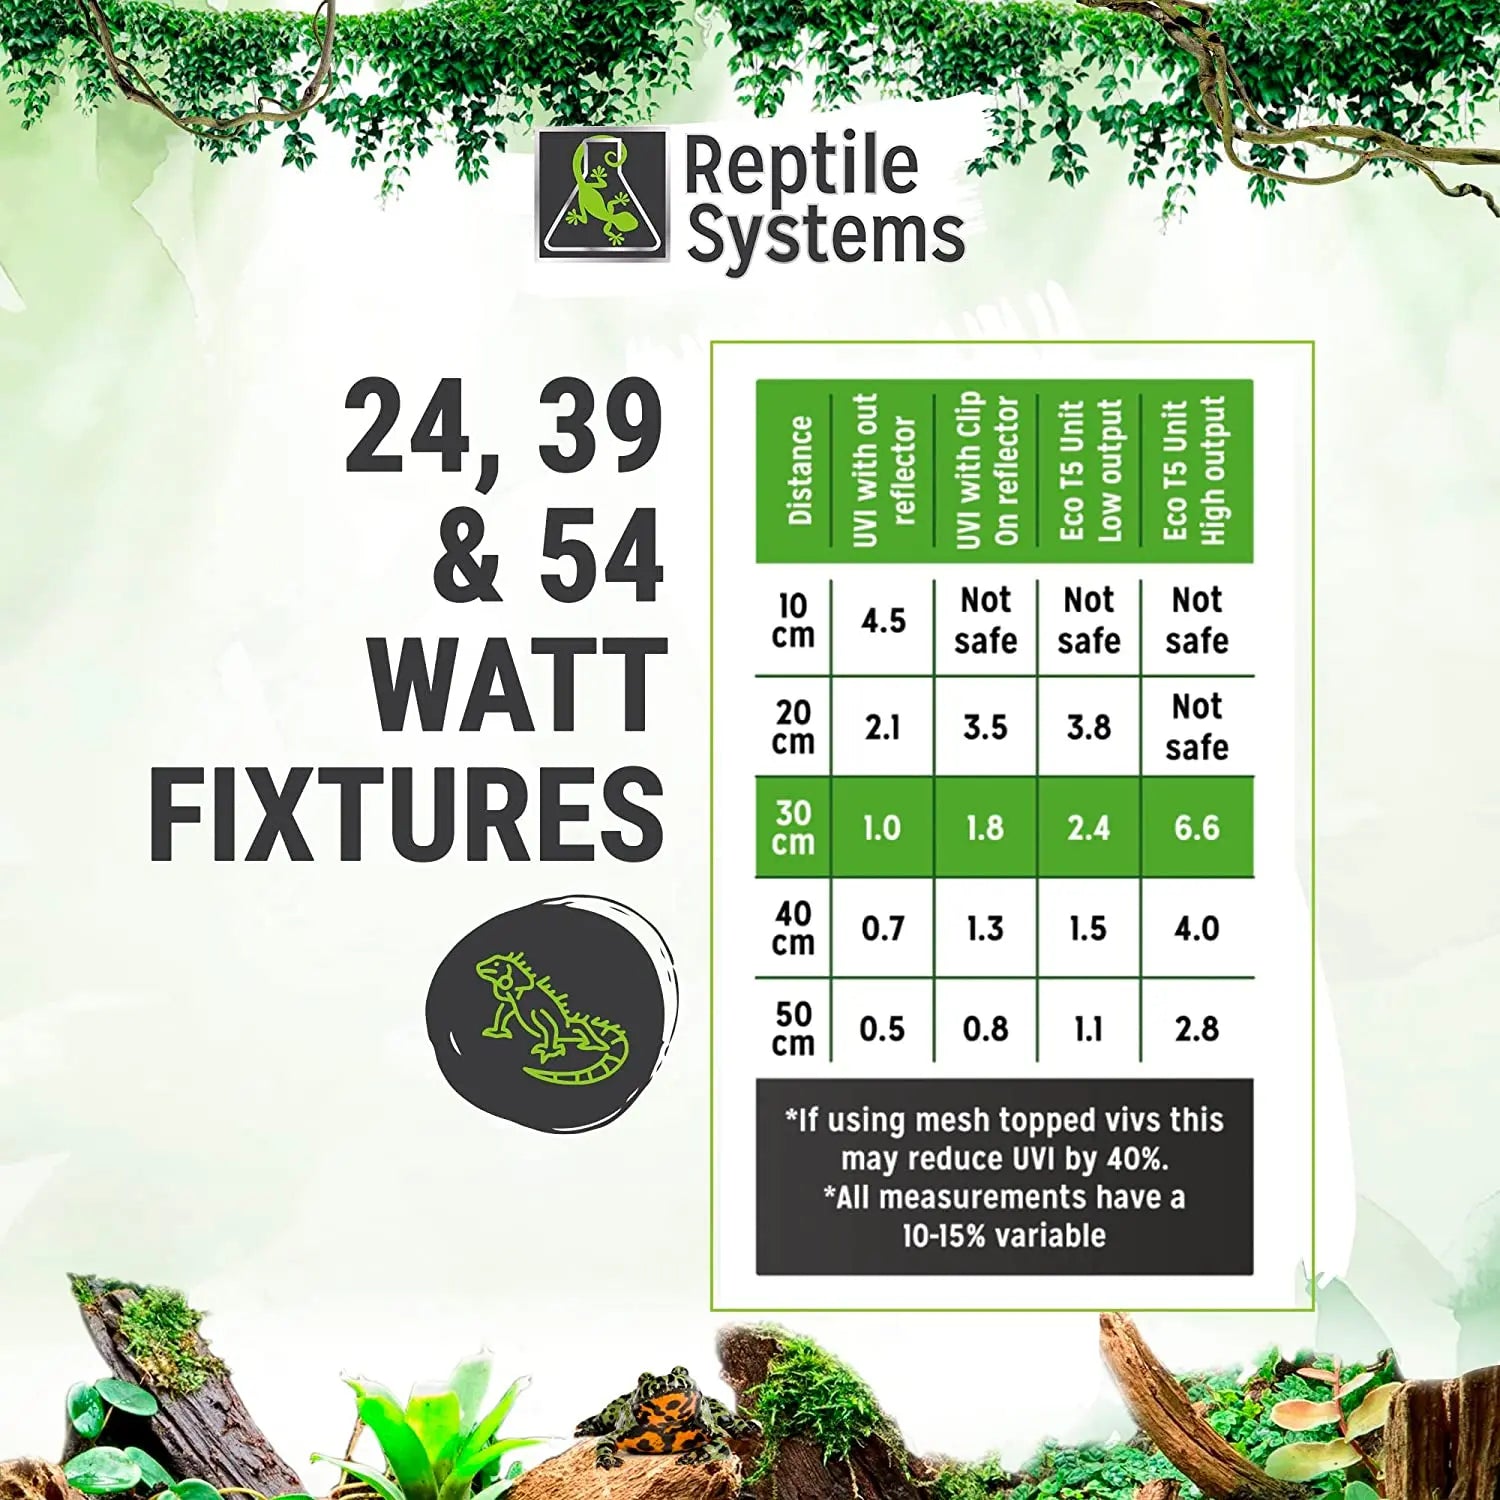 Reptile Systems Full Spectrum UVA & UVB Amphibian & Reptile Lighting T5 Light Fixture Zone 2 Lamp 6% Reptile Systems